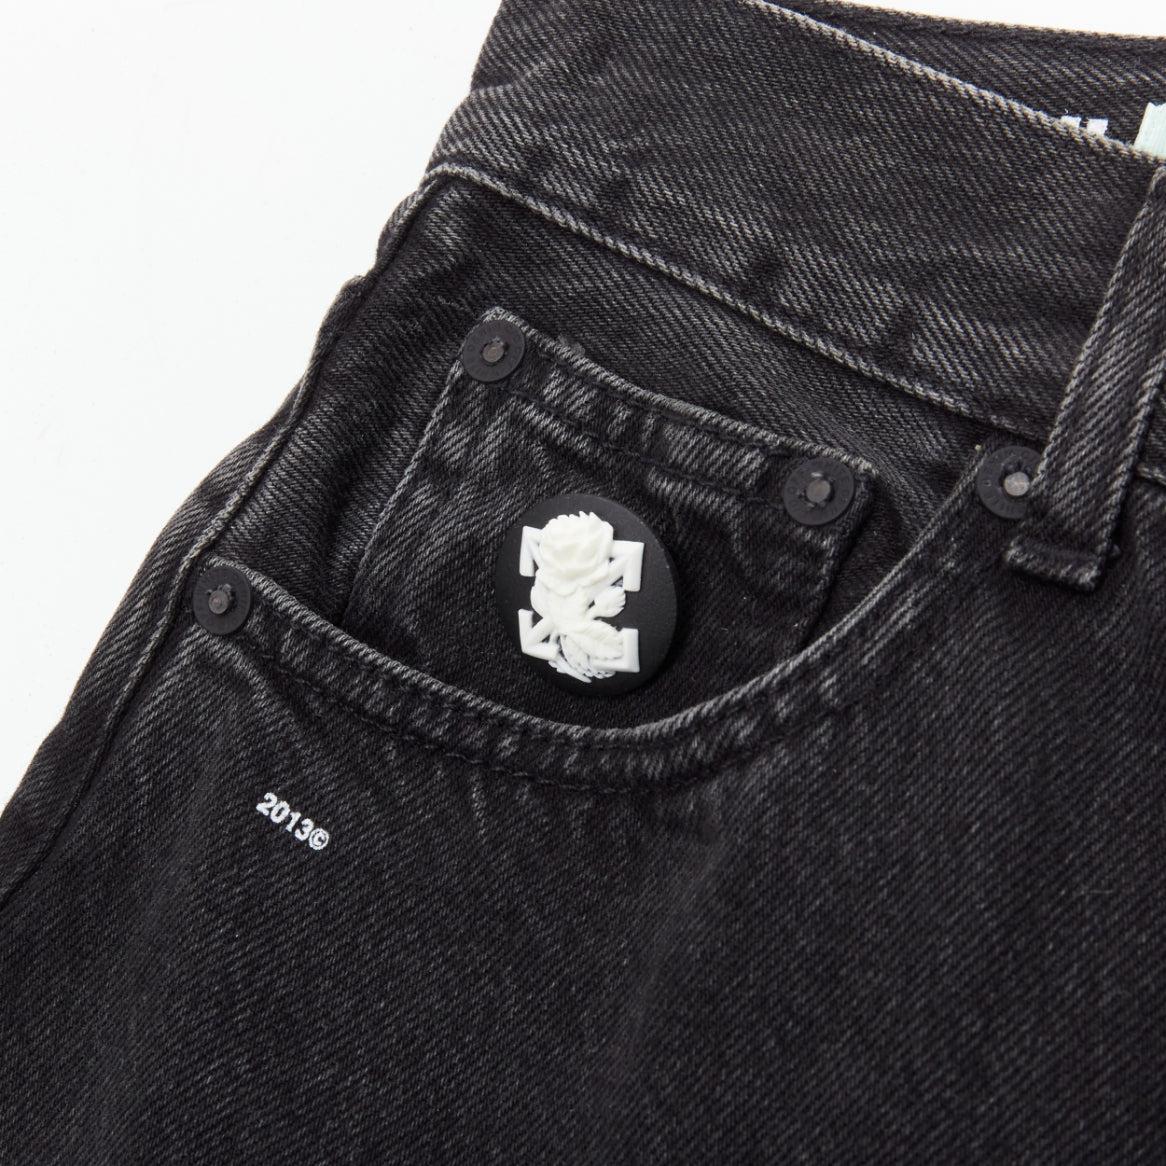 OFF WHITE C/O VIRGIL ABLOH black denim logo pin frayed hem wide culotte jeans XS
Reference: ANWU/A00545
Brand: Off White
Designer: Virgil Abloh
Material: Feels like cotton
Color: Black
Pattern: Solid
Closure: Zip Fly
Extra Details: 5-pocket design.